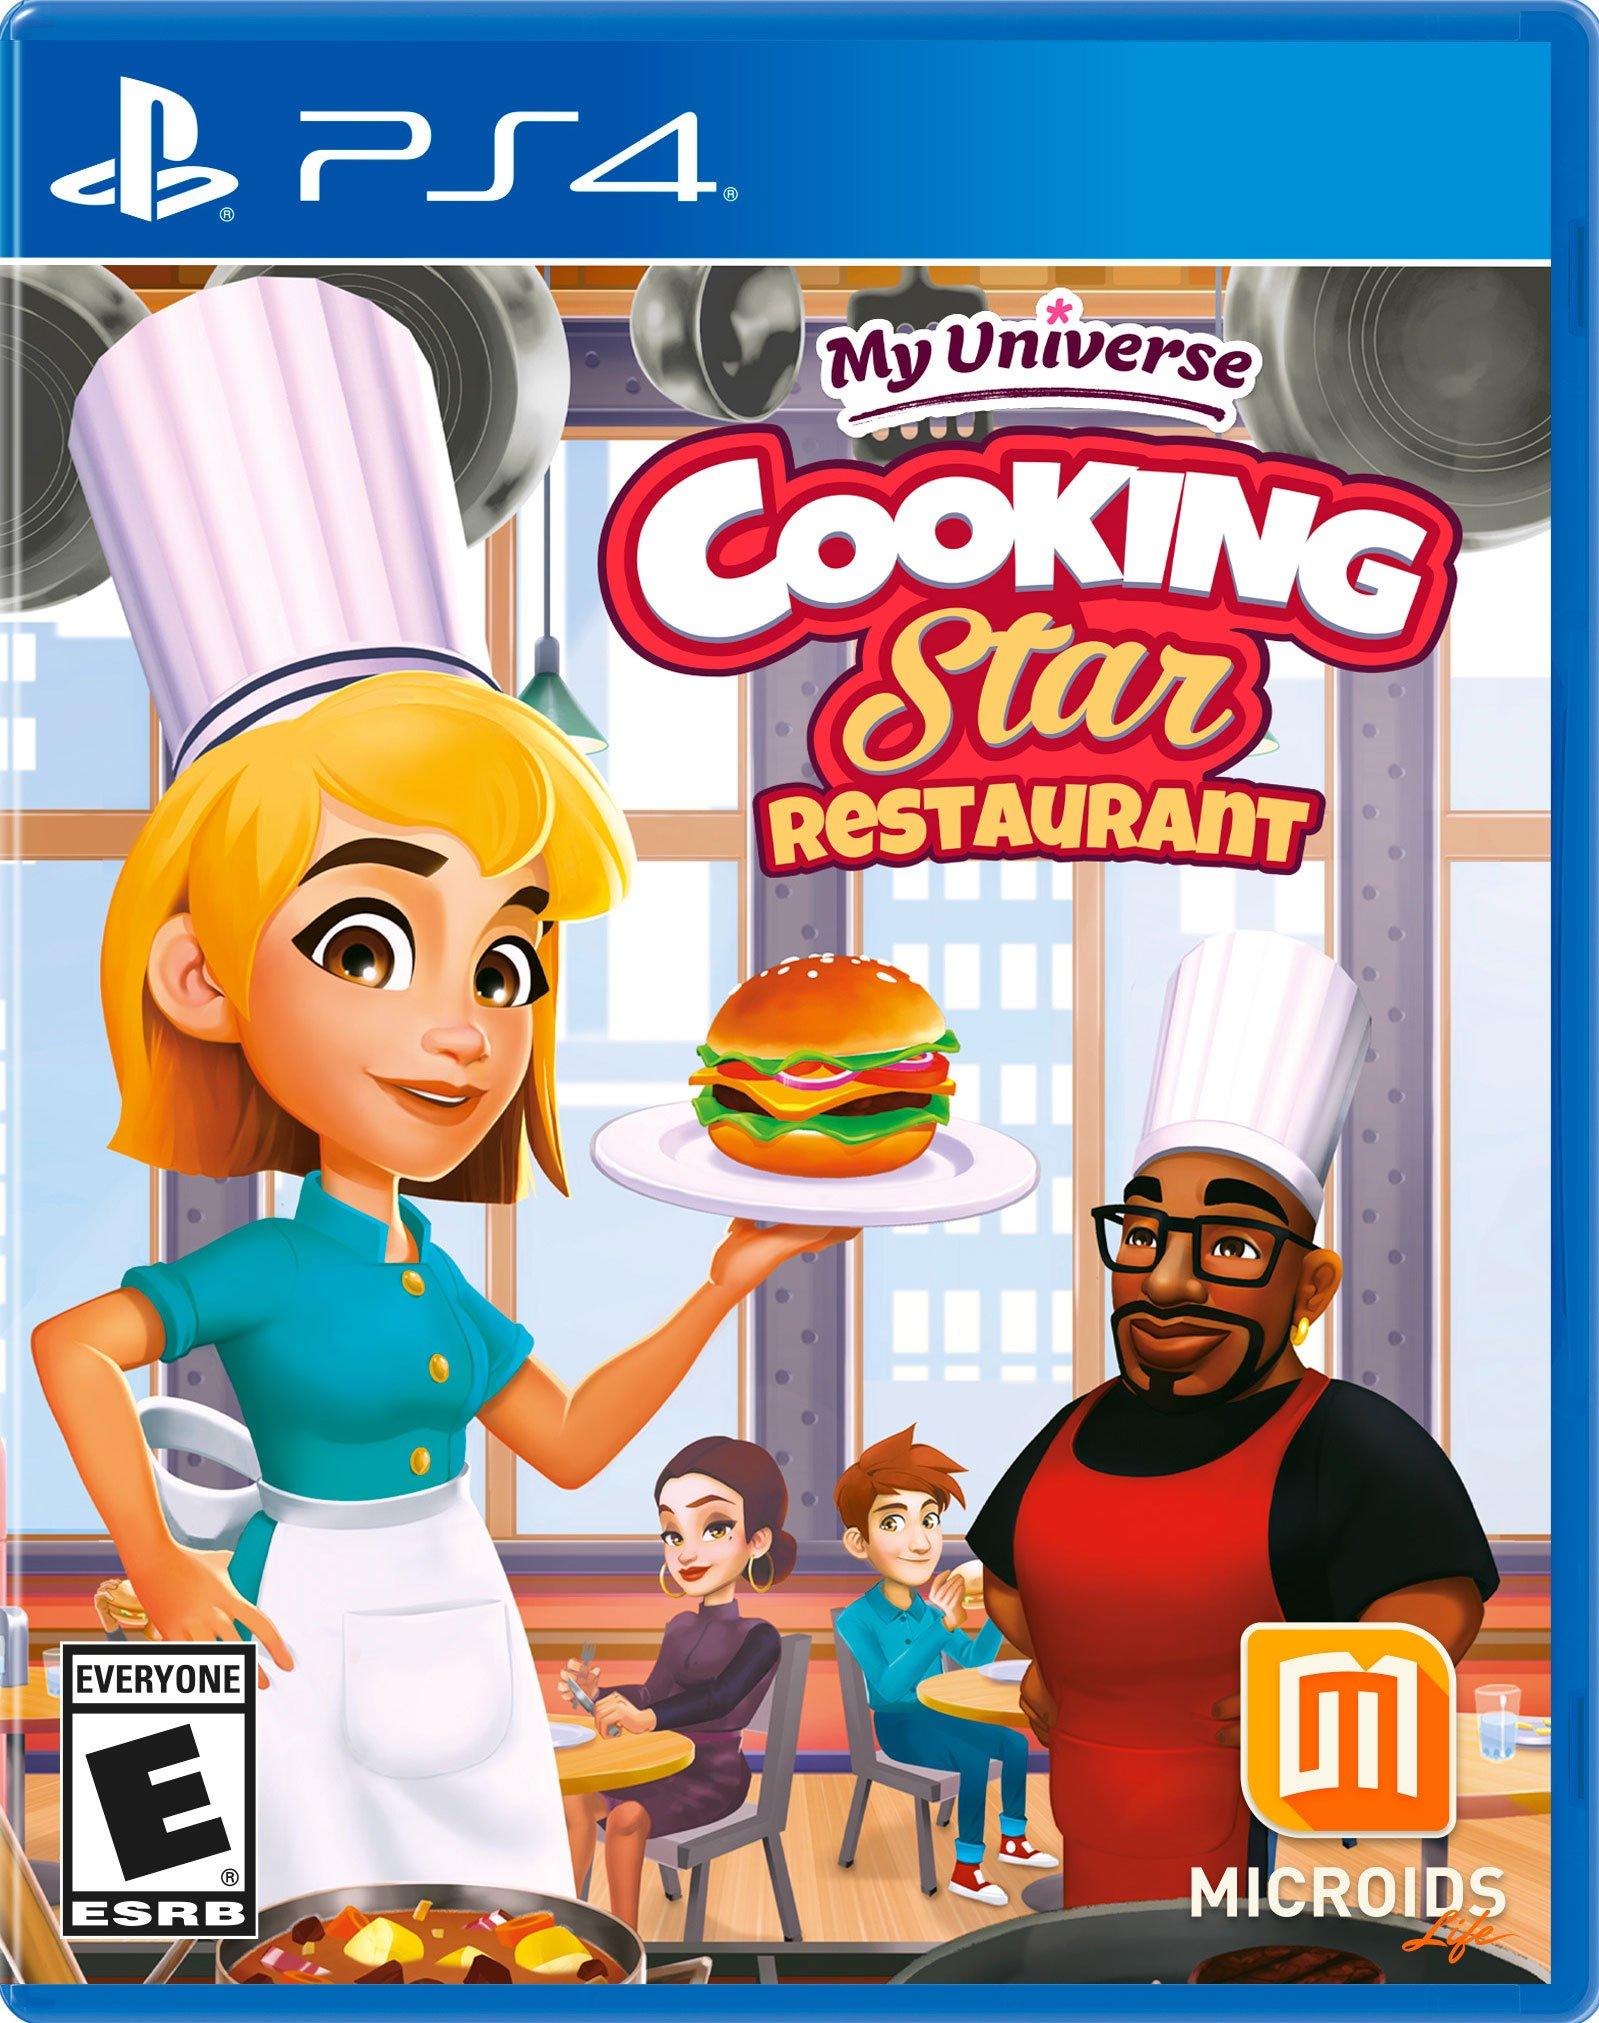 Star Chef: Cooking & Restaurant Game no Steam